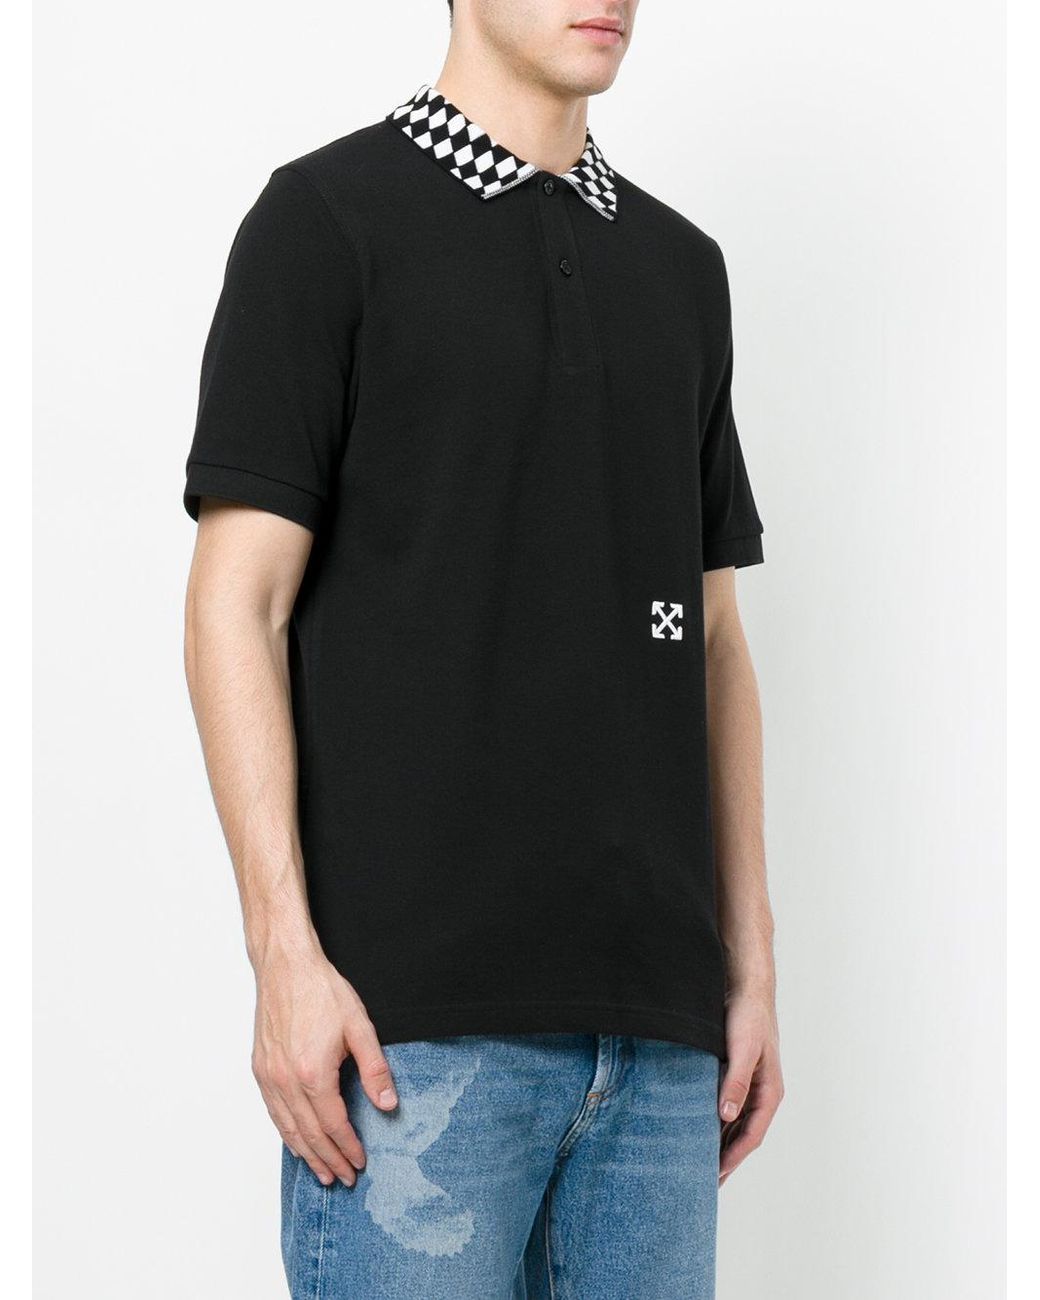 Off-White c/o Virgil Abloh Arrows Polo Shirt in Black for Men | Lyst